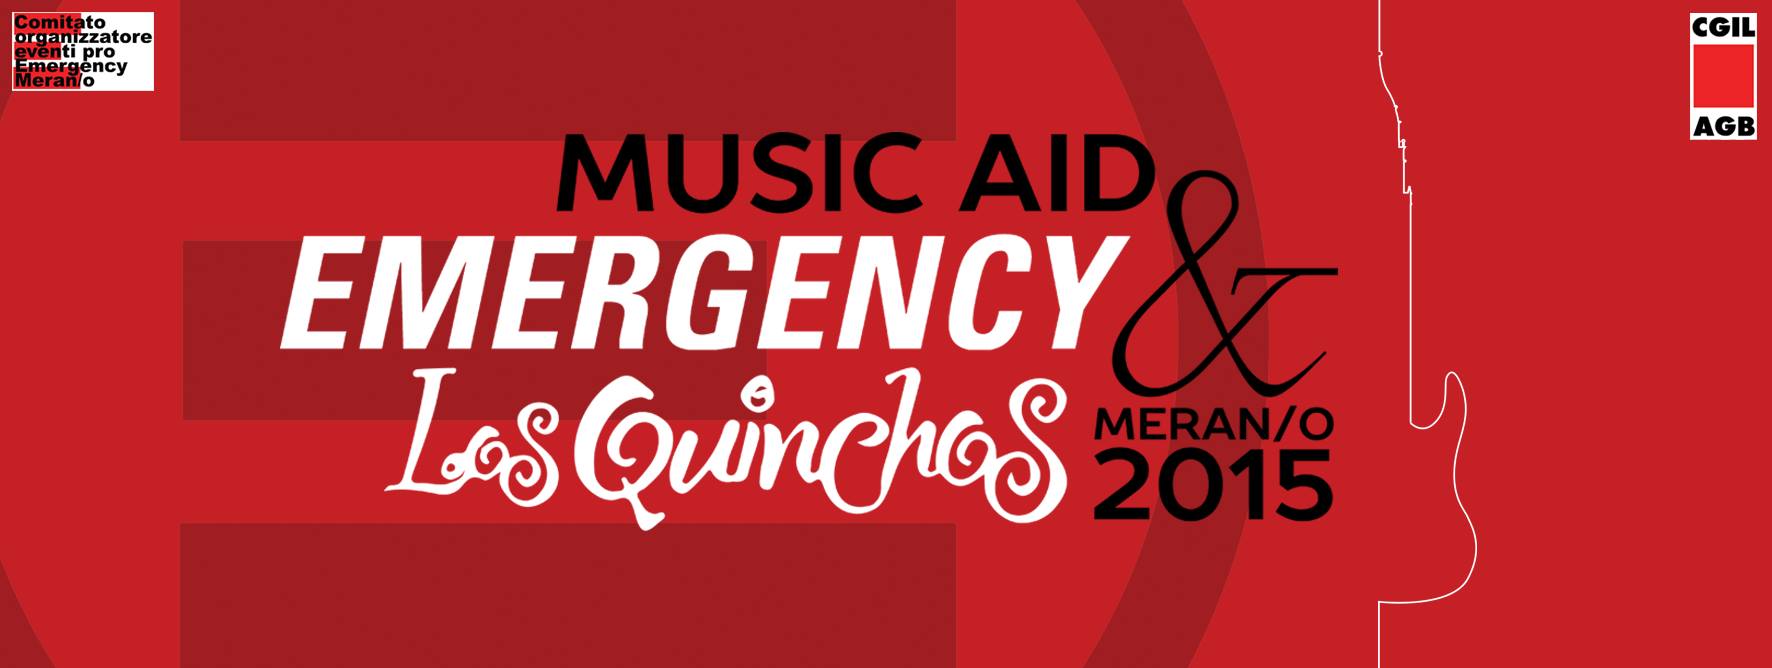 Music_AID_Emergency_and_Los_Quinchos_2015